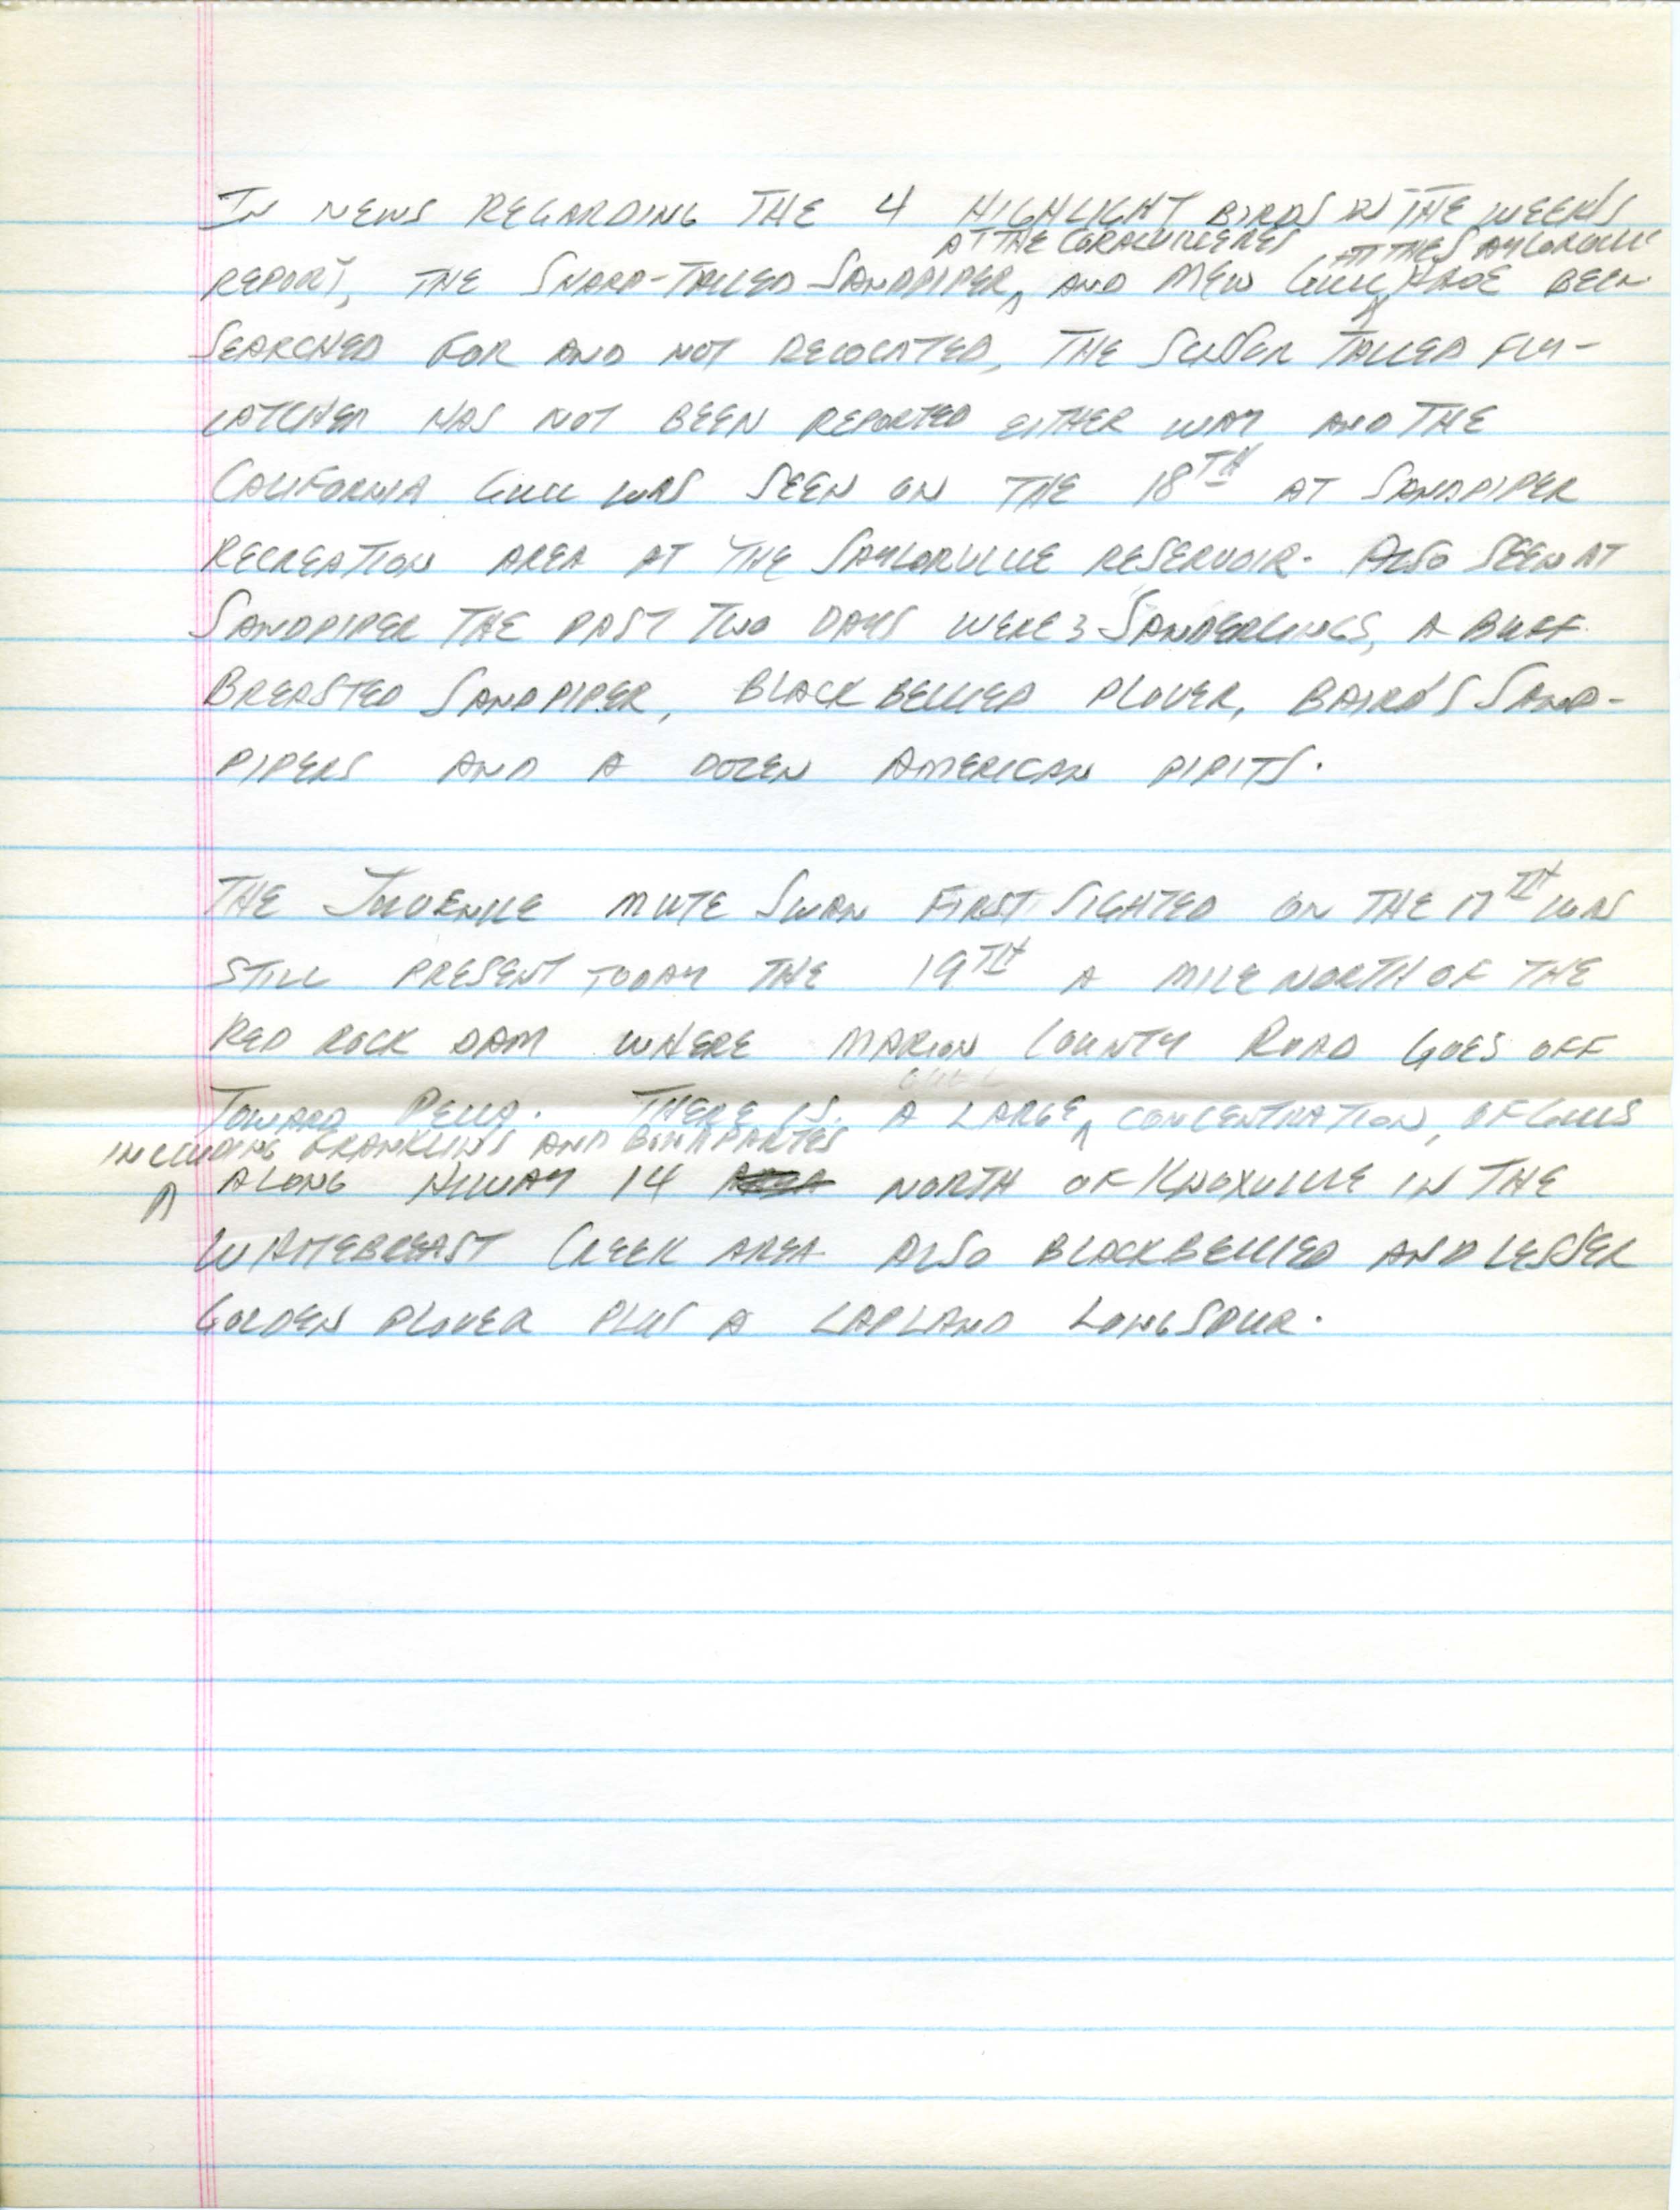 Iowa Birdline update, October 19, 1990, notes